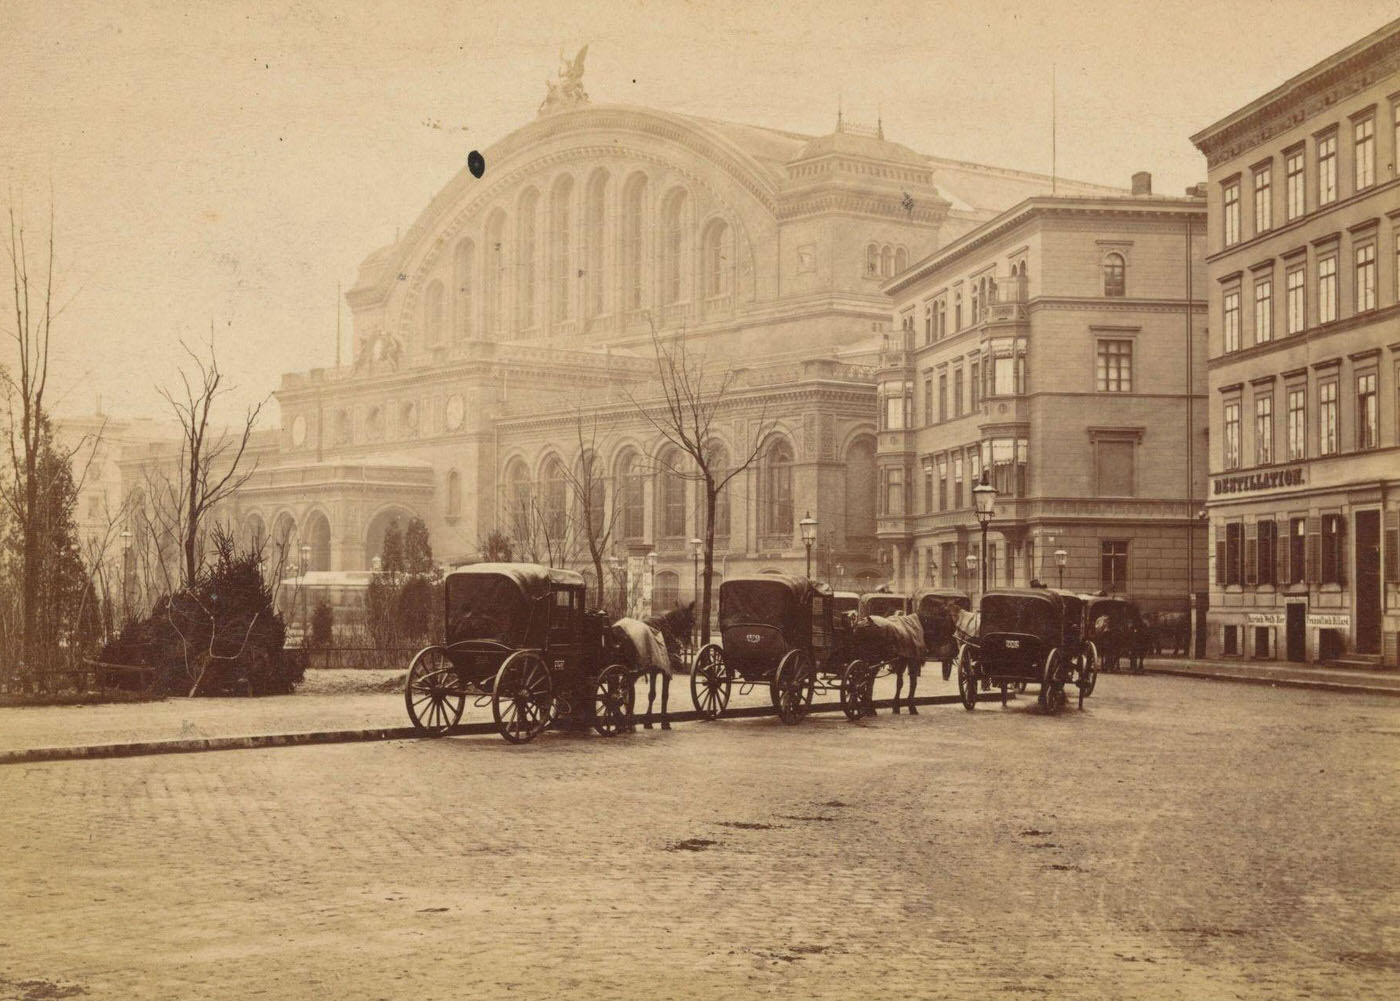 Anhalter Bahnhof, Berlin, 1881.